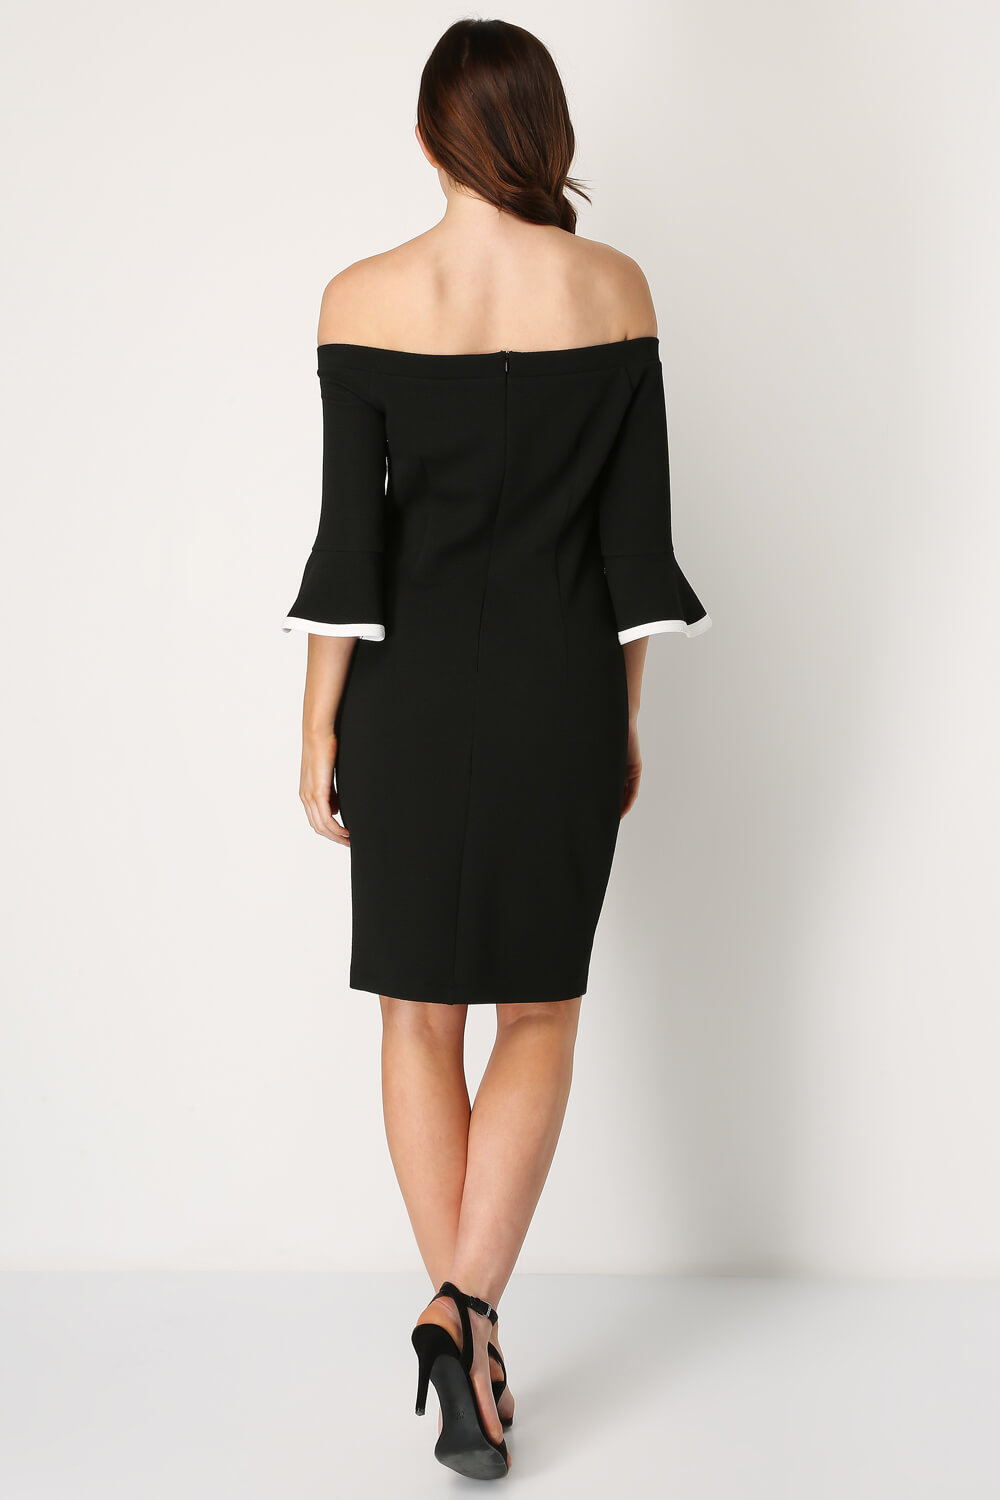 Black Bardot Contrast Trim Flute Sleeve Dress, Image 3 of 5